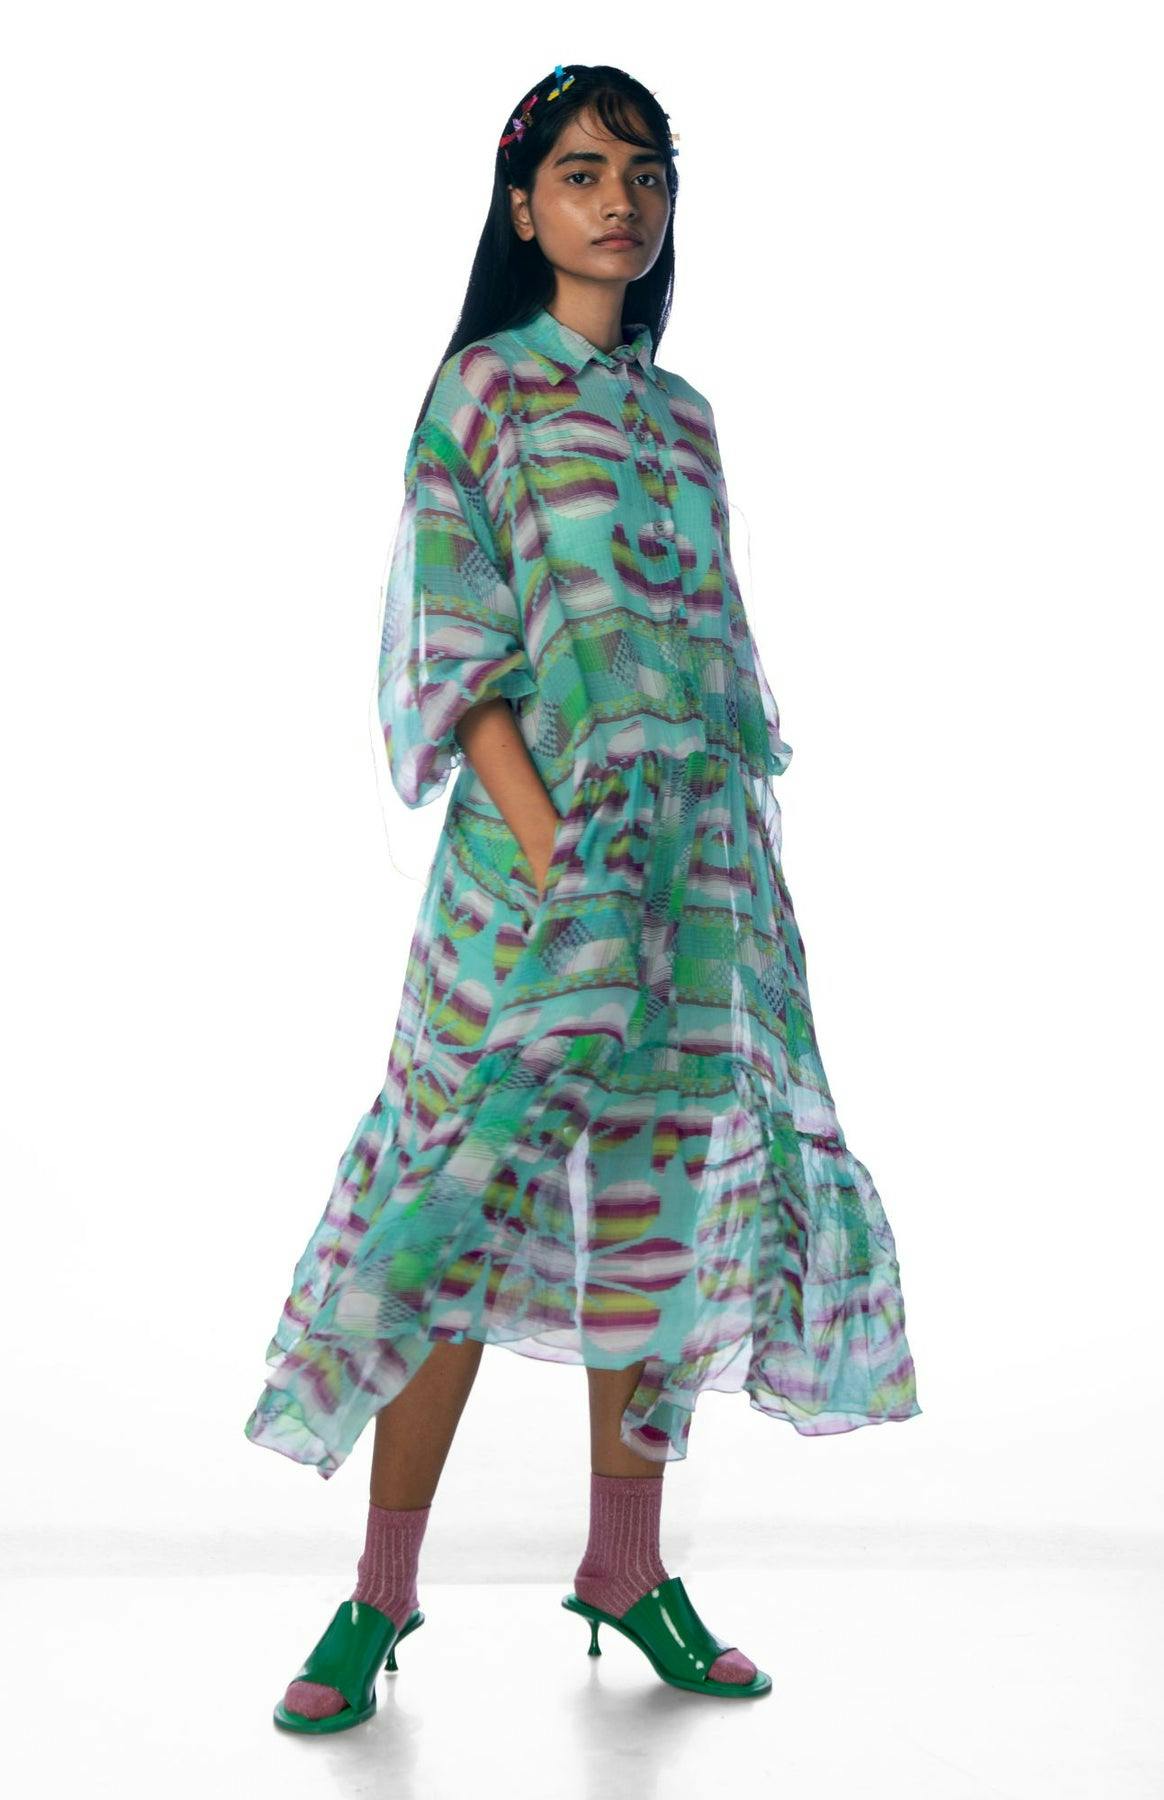 CHATAI DRESS, a product by Doh tak keh